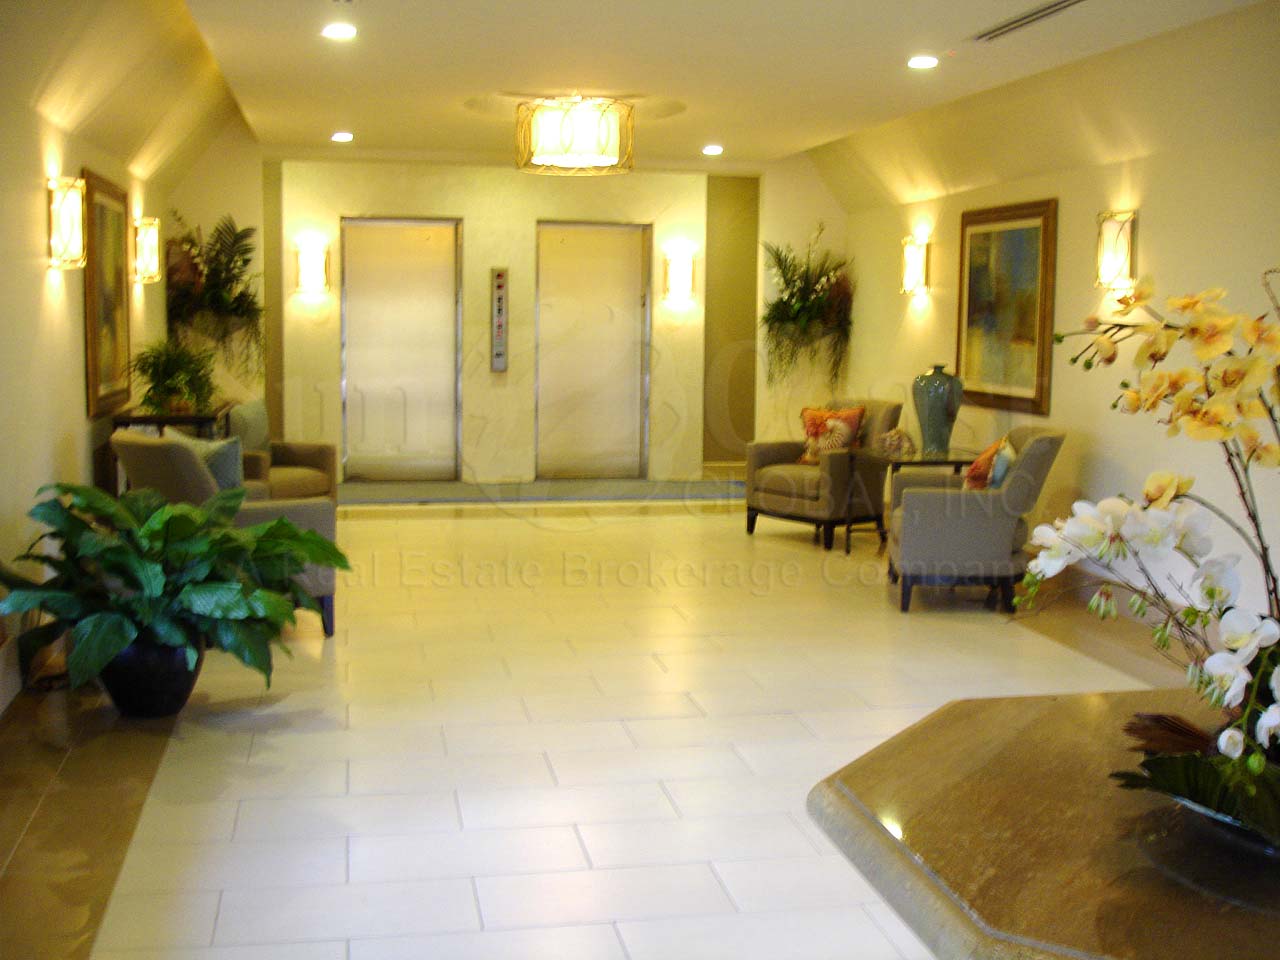 Gulf View Beach Club Lobby and Elevator